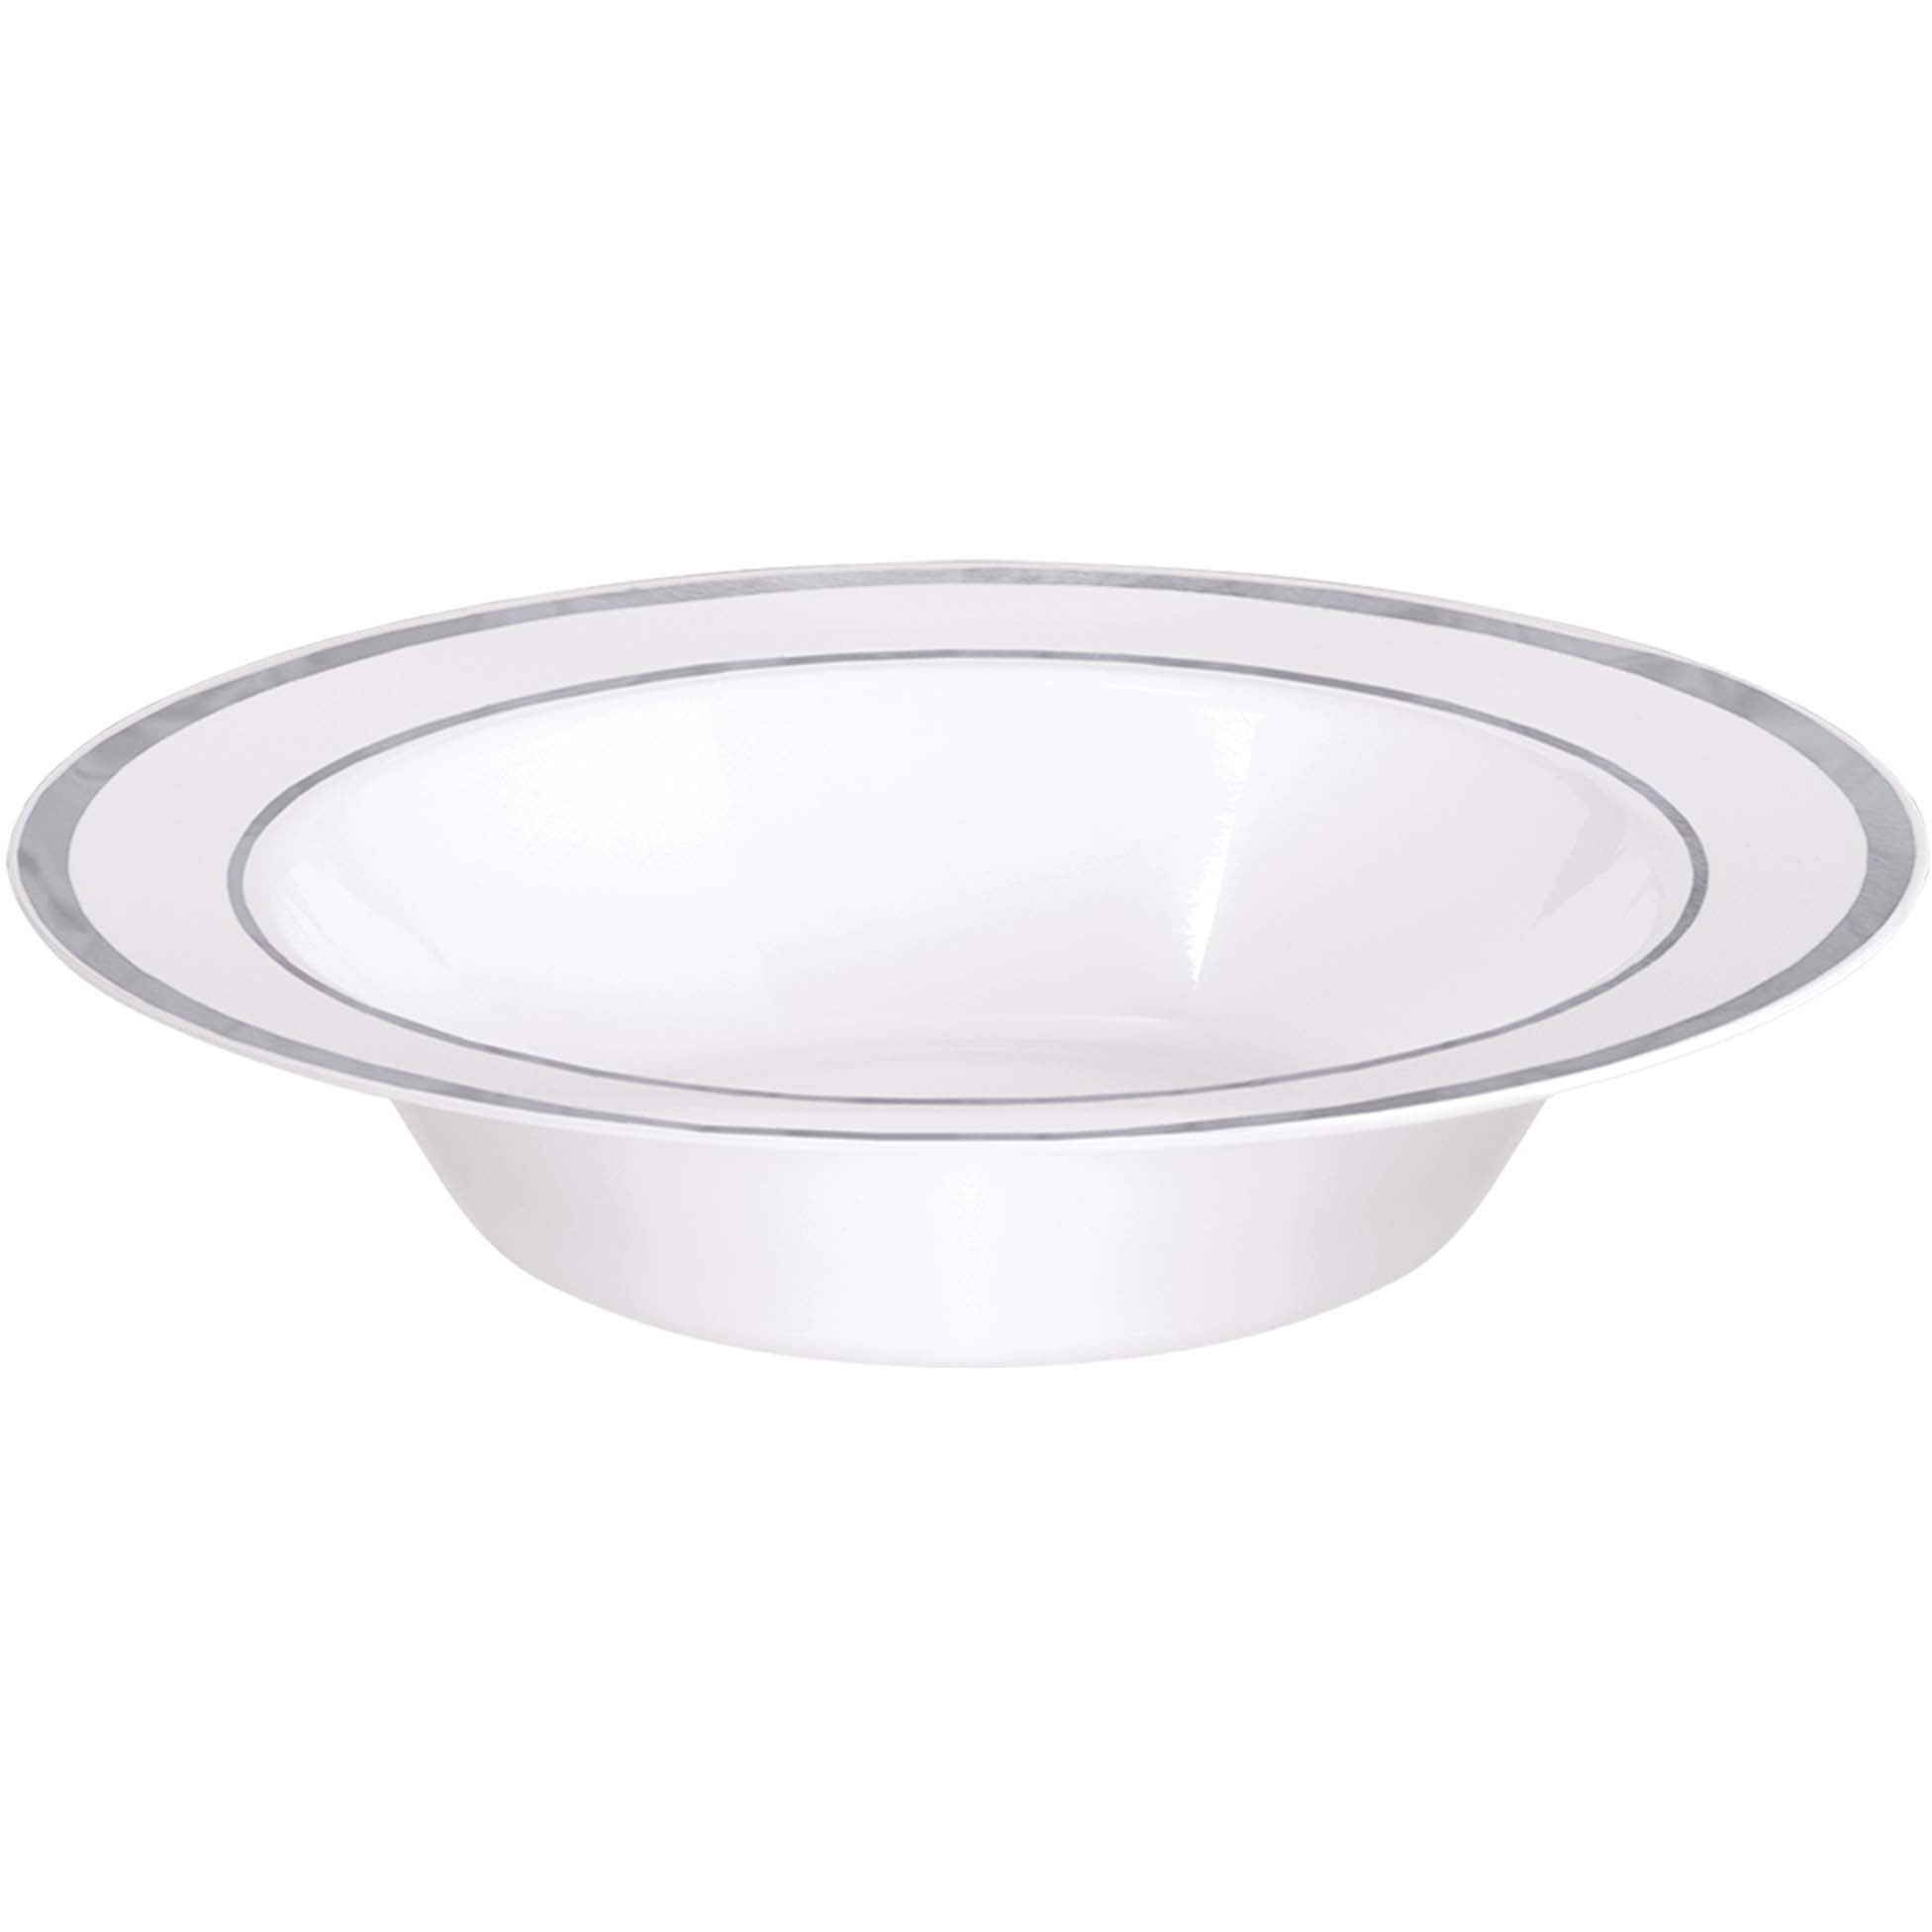 Amscan BASIC White Premium Plastic Bowls with Silver Trim